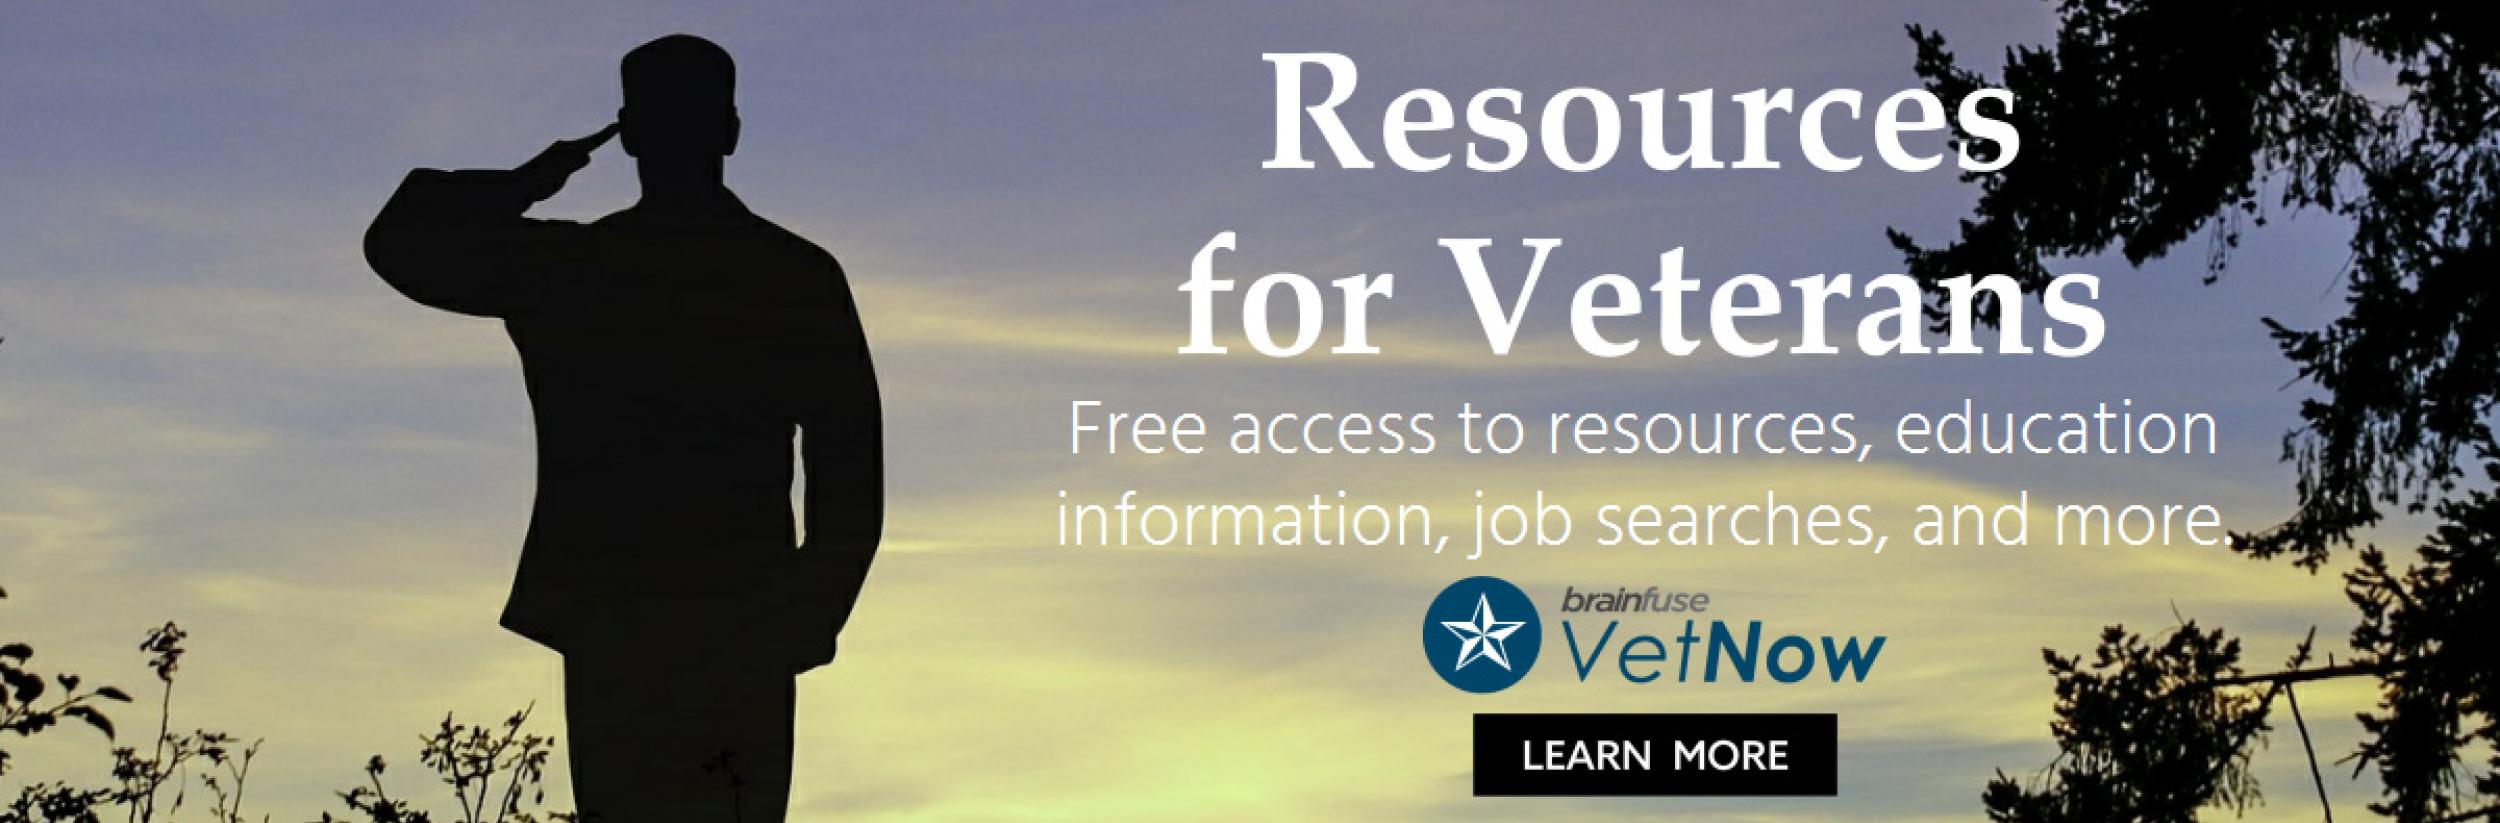 Image for "Resources for Veterans slide"